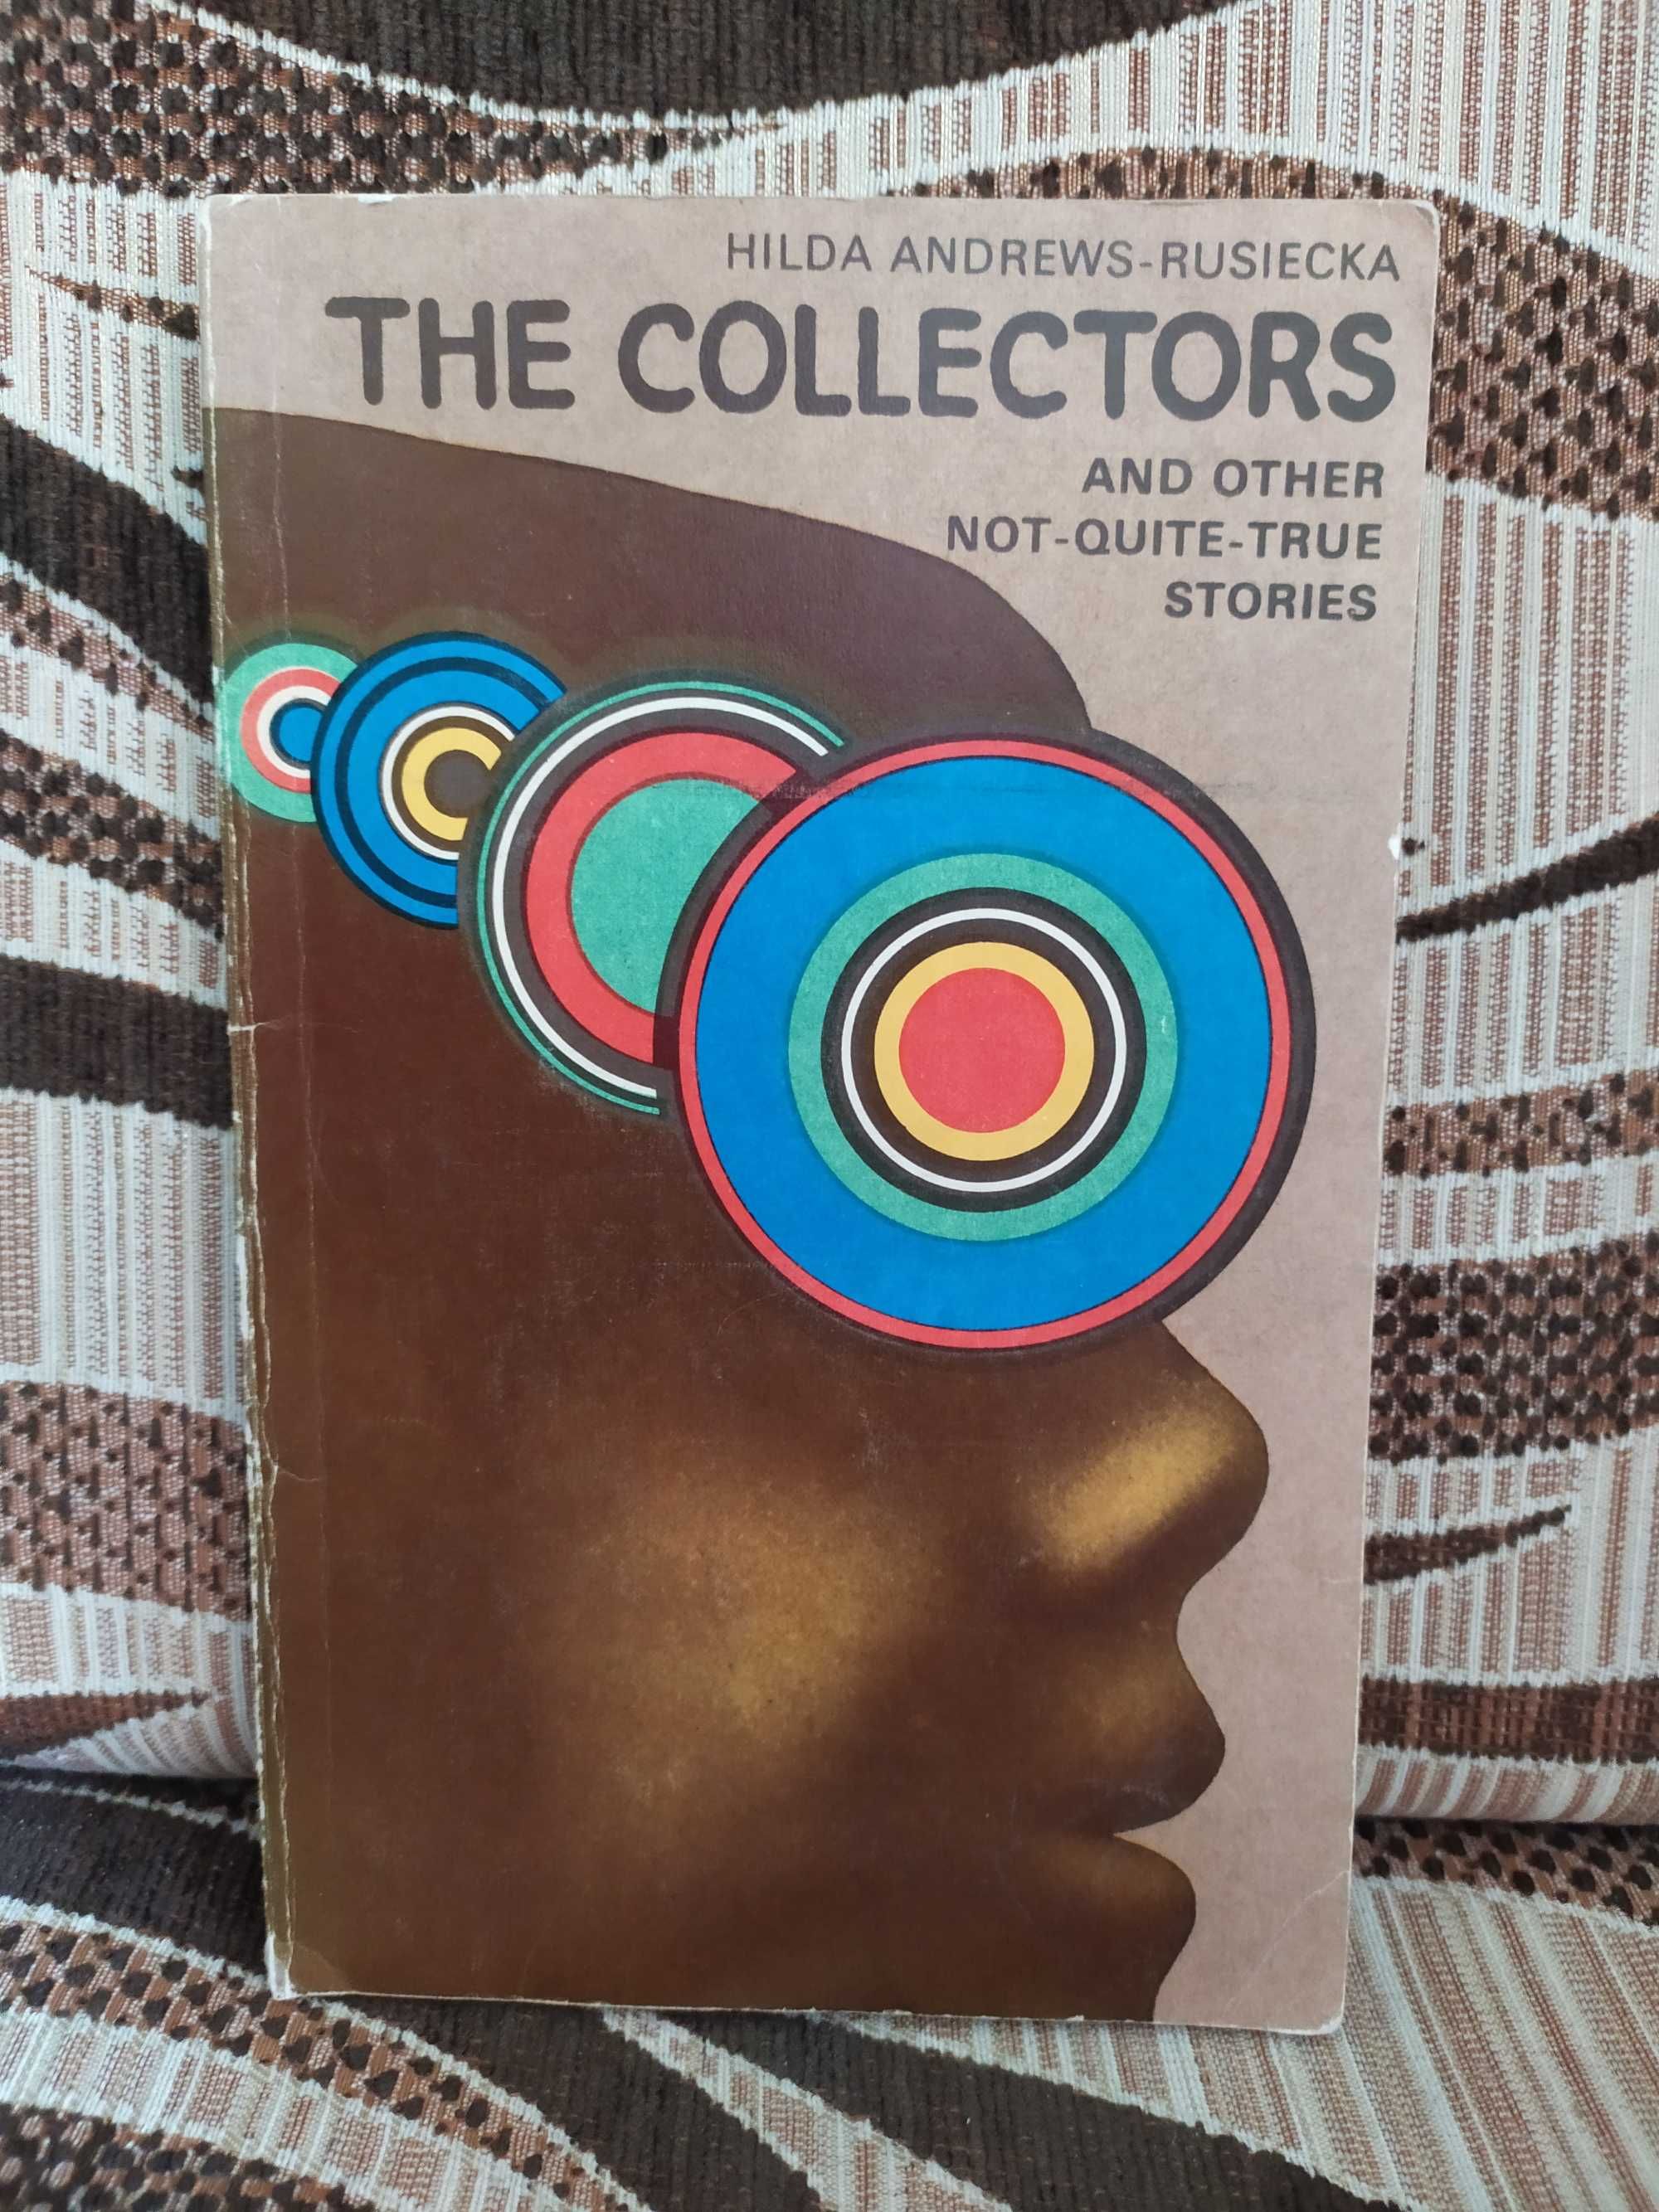 The collectors - Hilda Andrews-Rusiecka